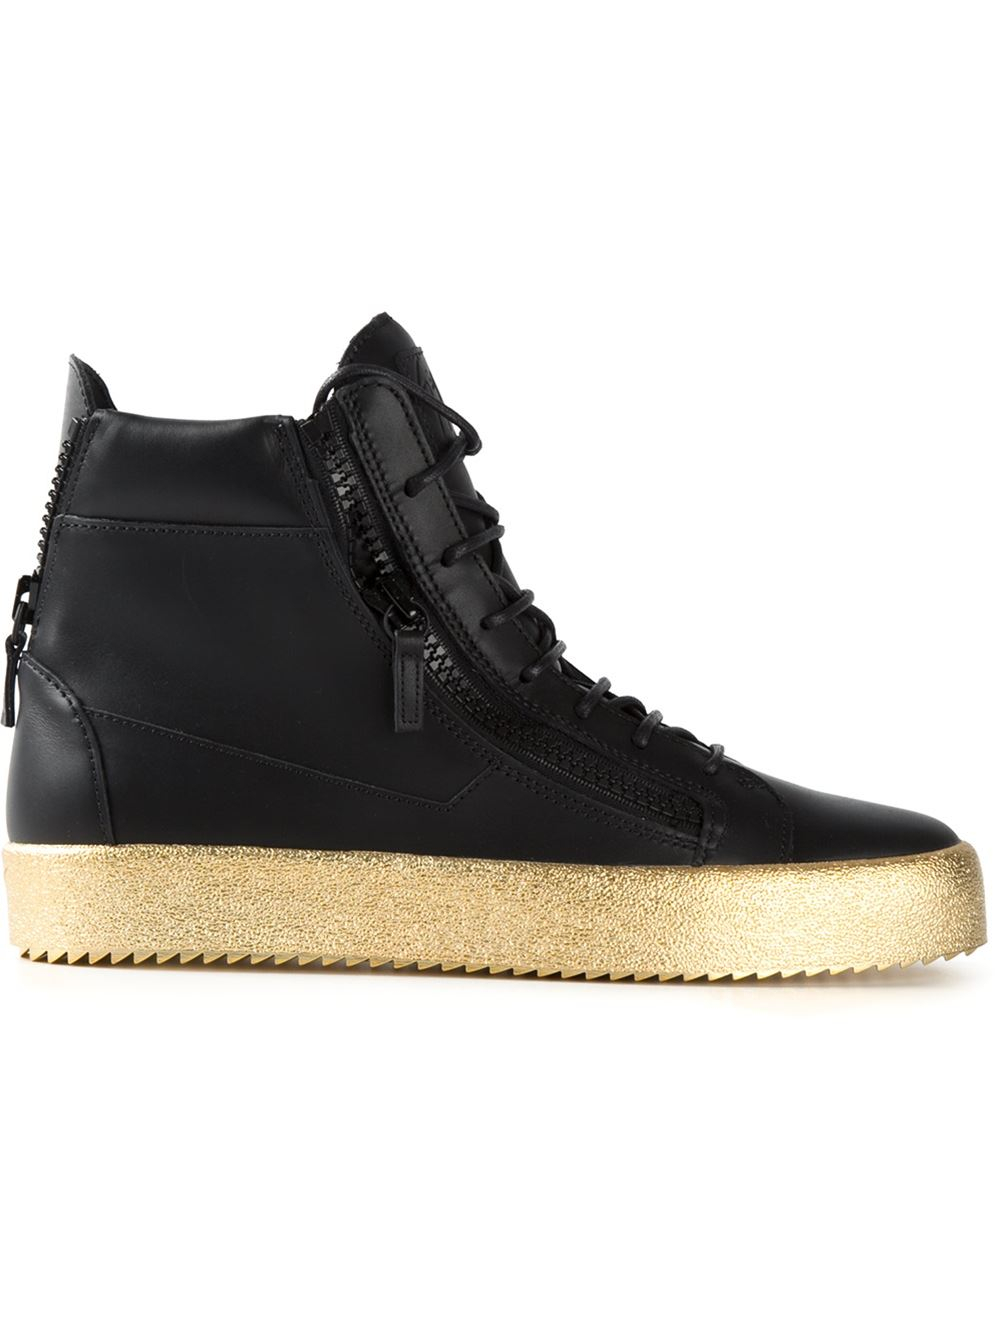 Zanotti Golden High-Top Sneakers in Black for Men | Lyst